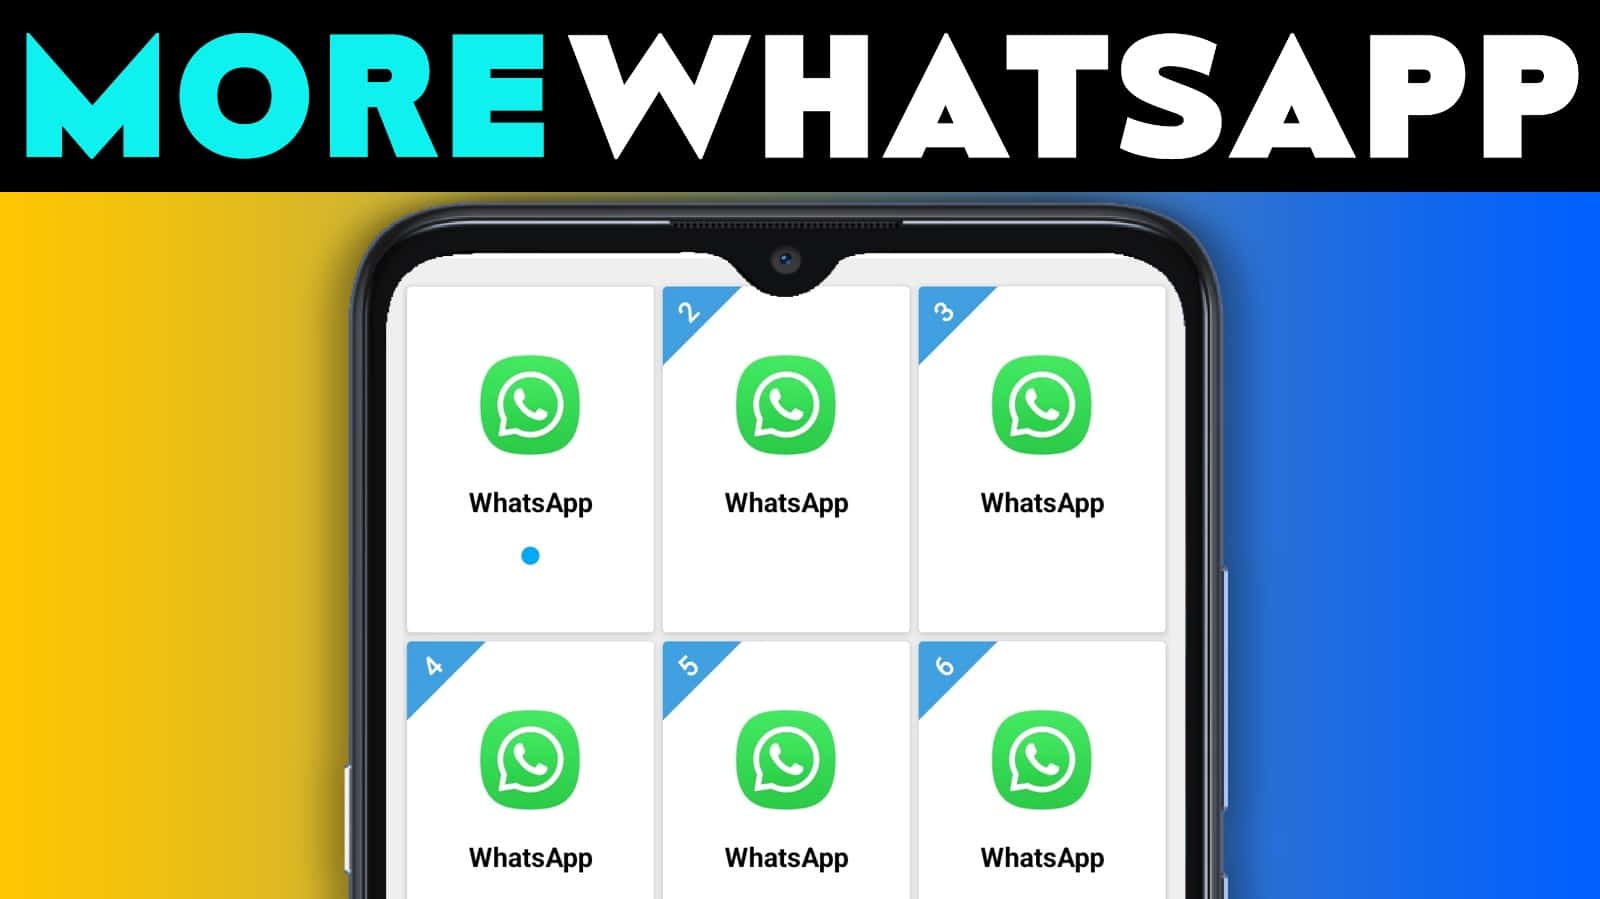 More WhatsApp Experience